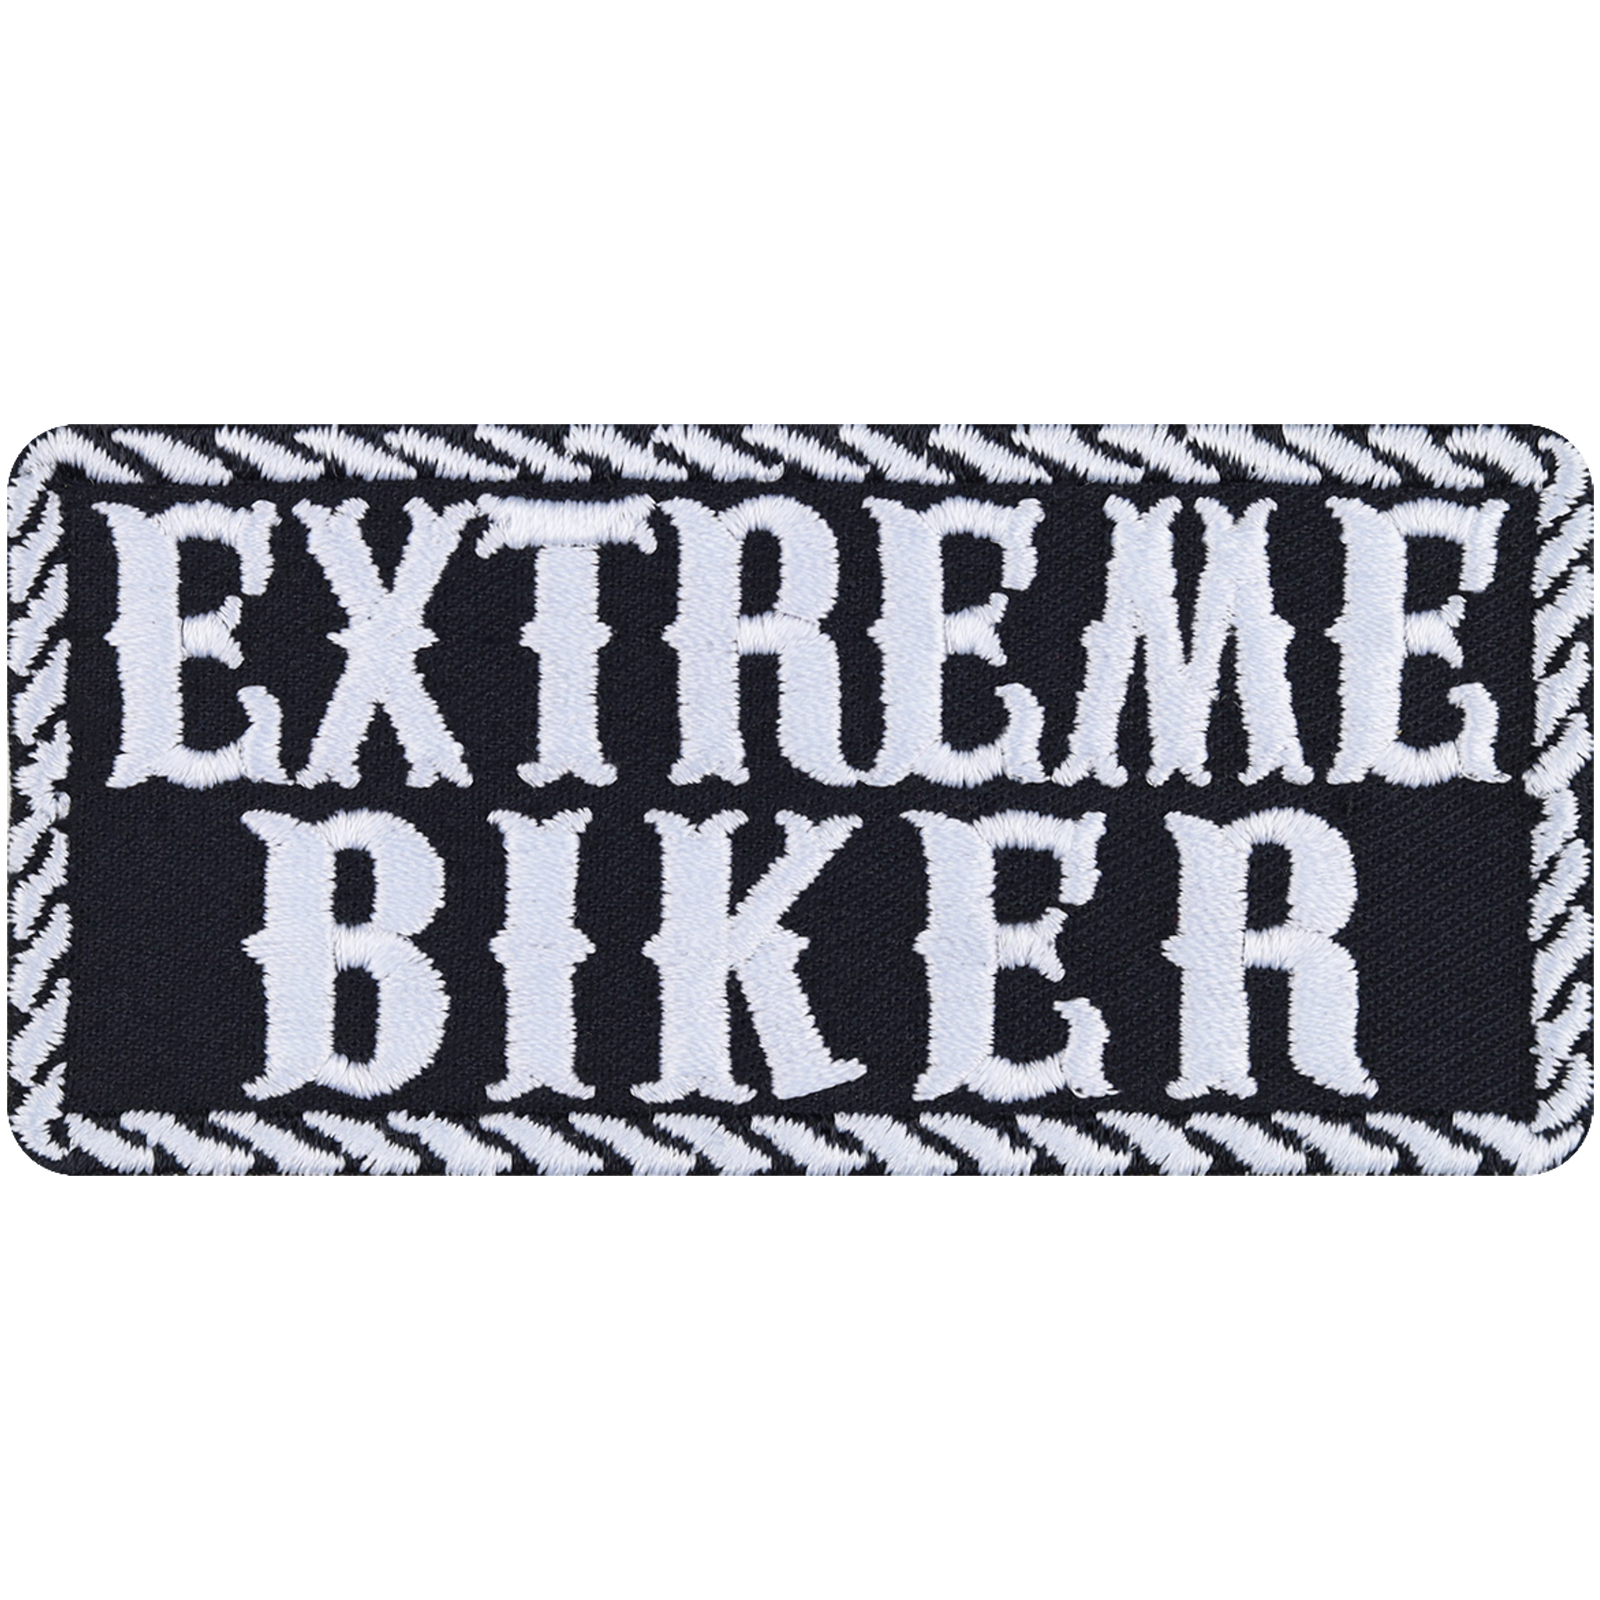 Extreme biker - Patch